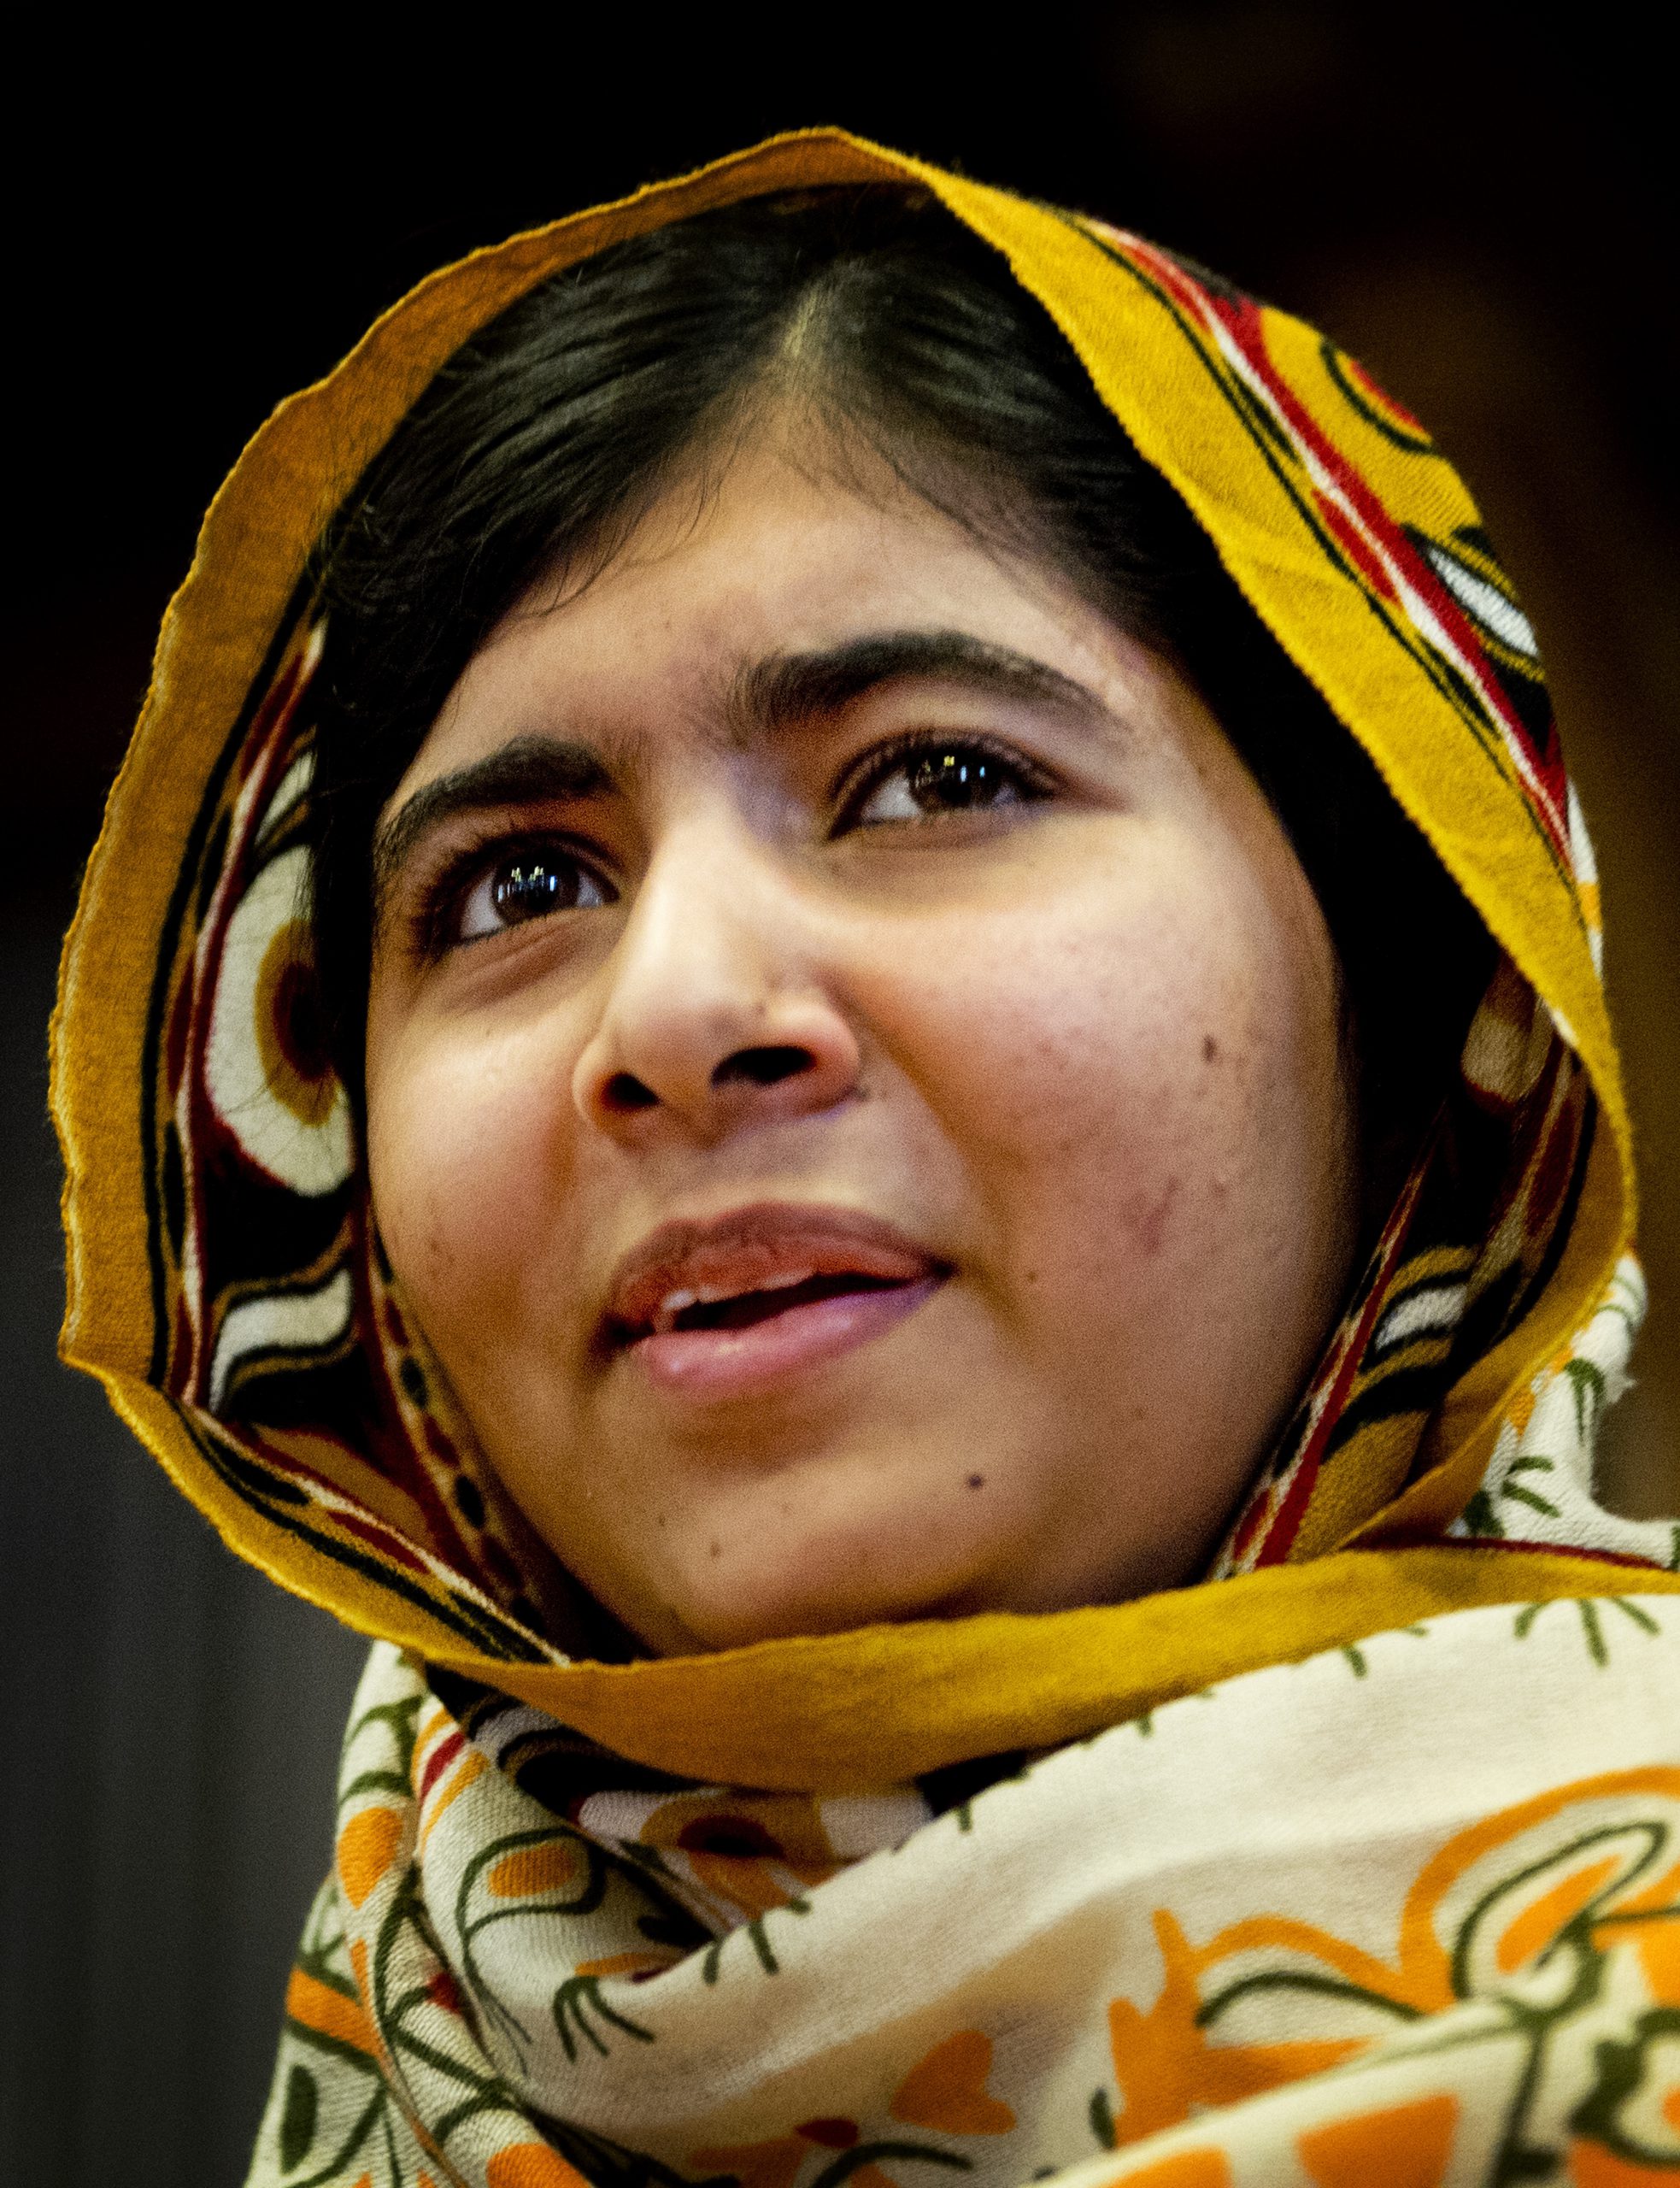 Girls’ education in Pakistan – Malala Yousafzai